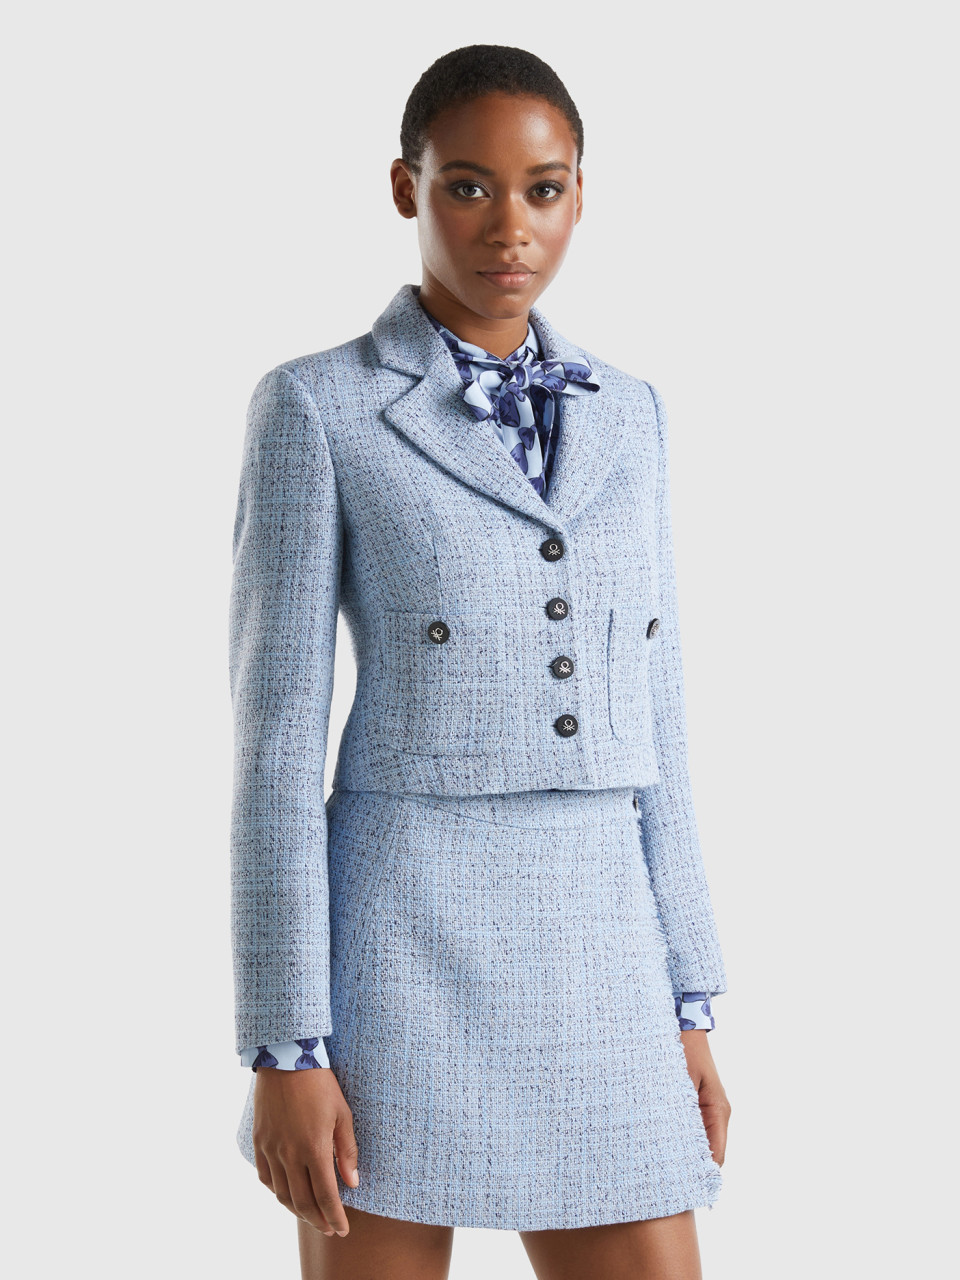 Benetton, Cropped Tweed Blazer, Light Blue, Women